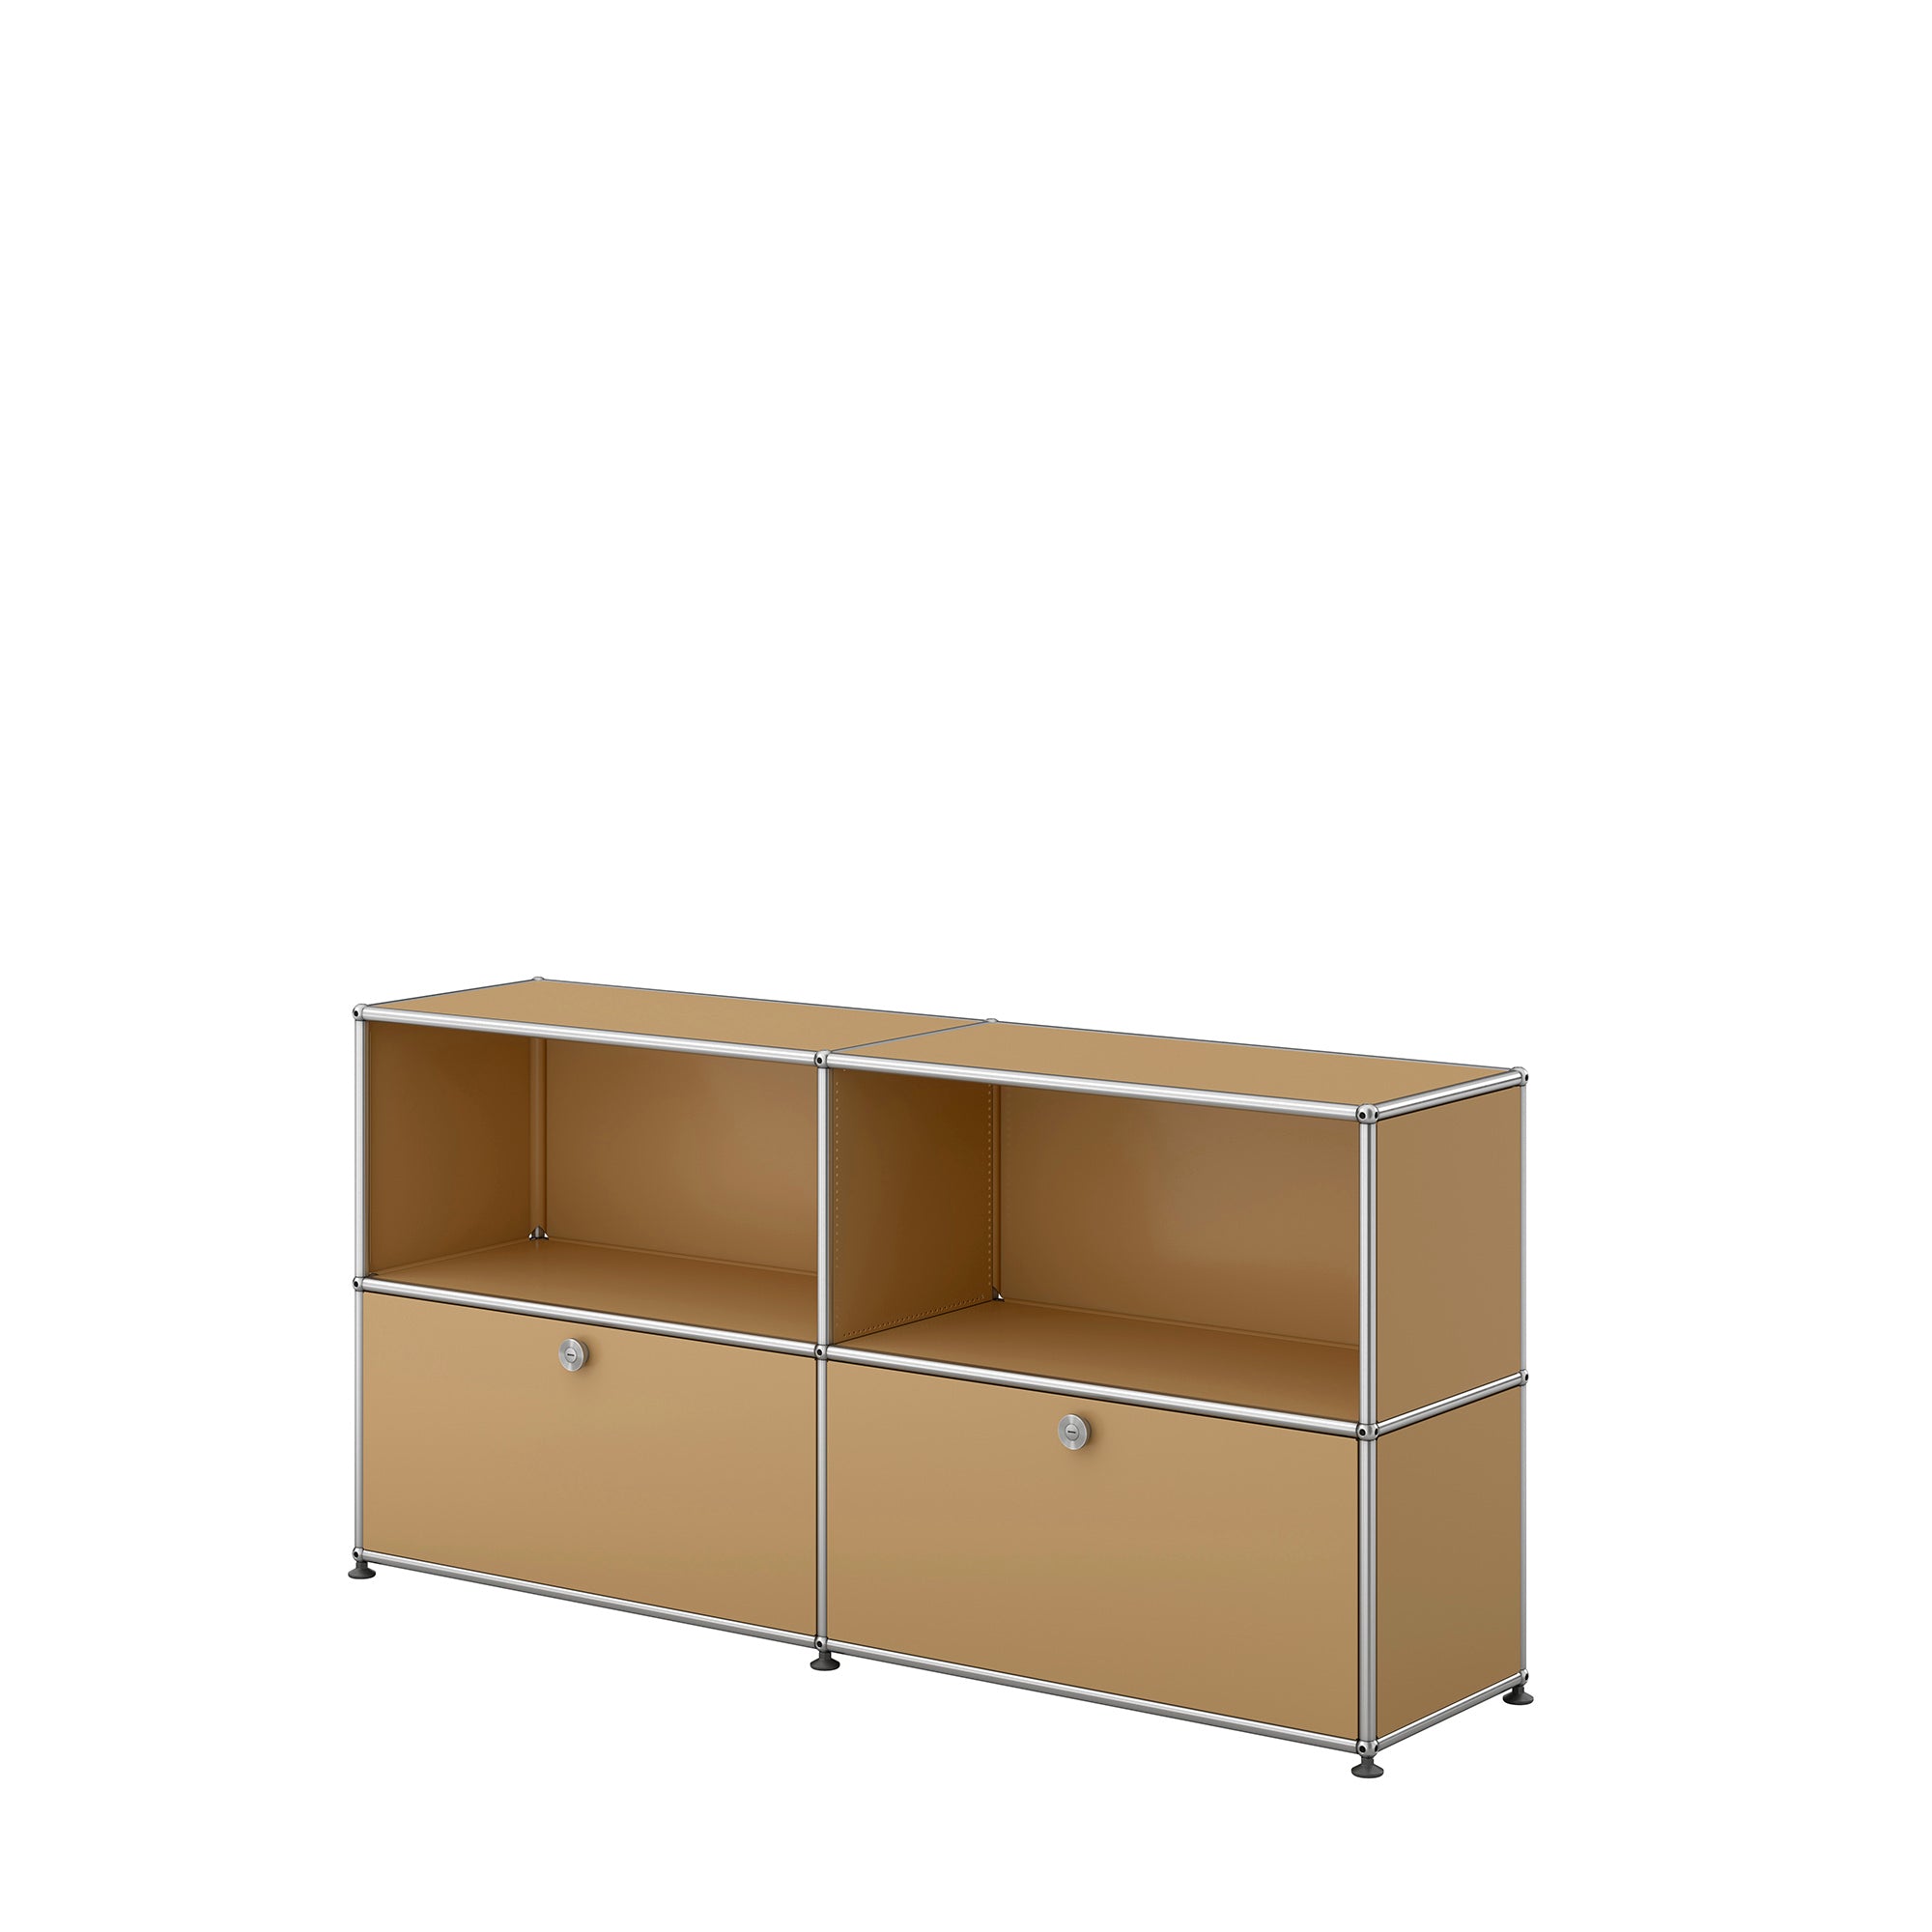 Haller cabinet modular config. 3